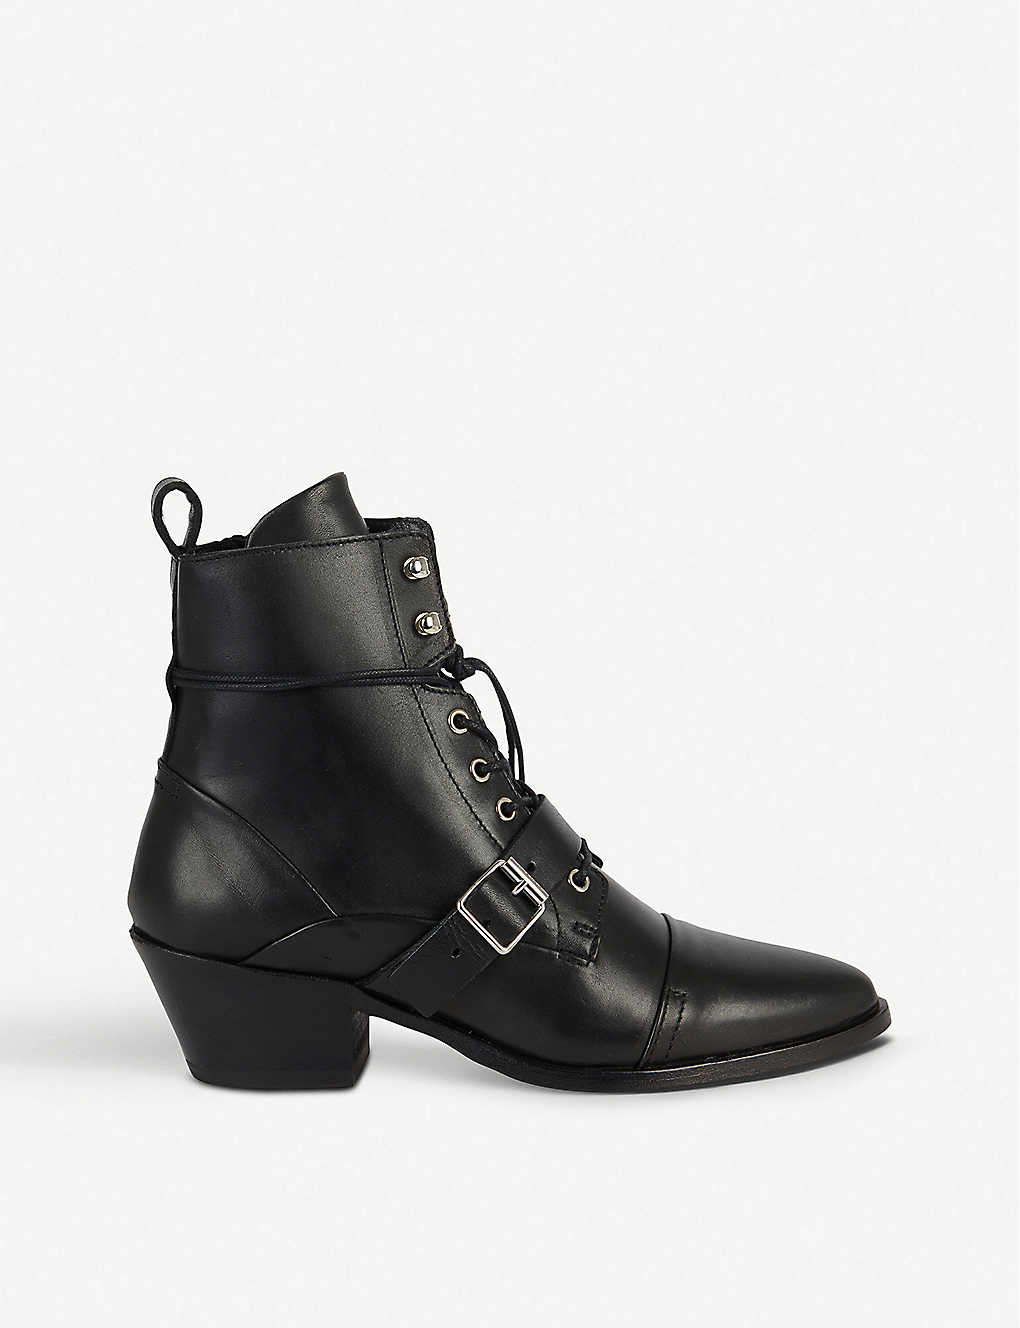 ALLSAINTS - Katy heeled leather boots | Selfridges.com